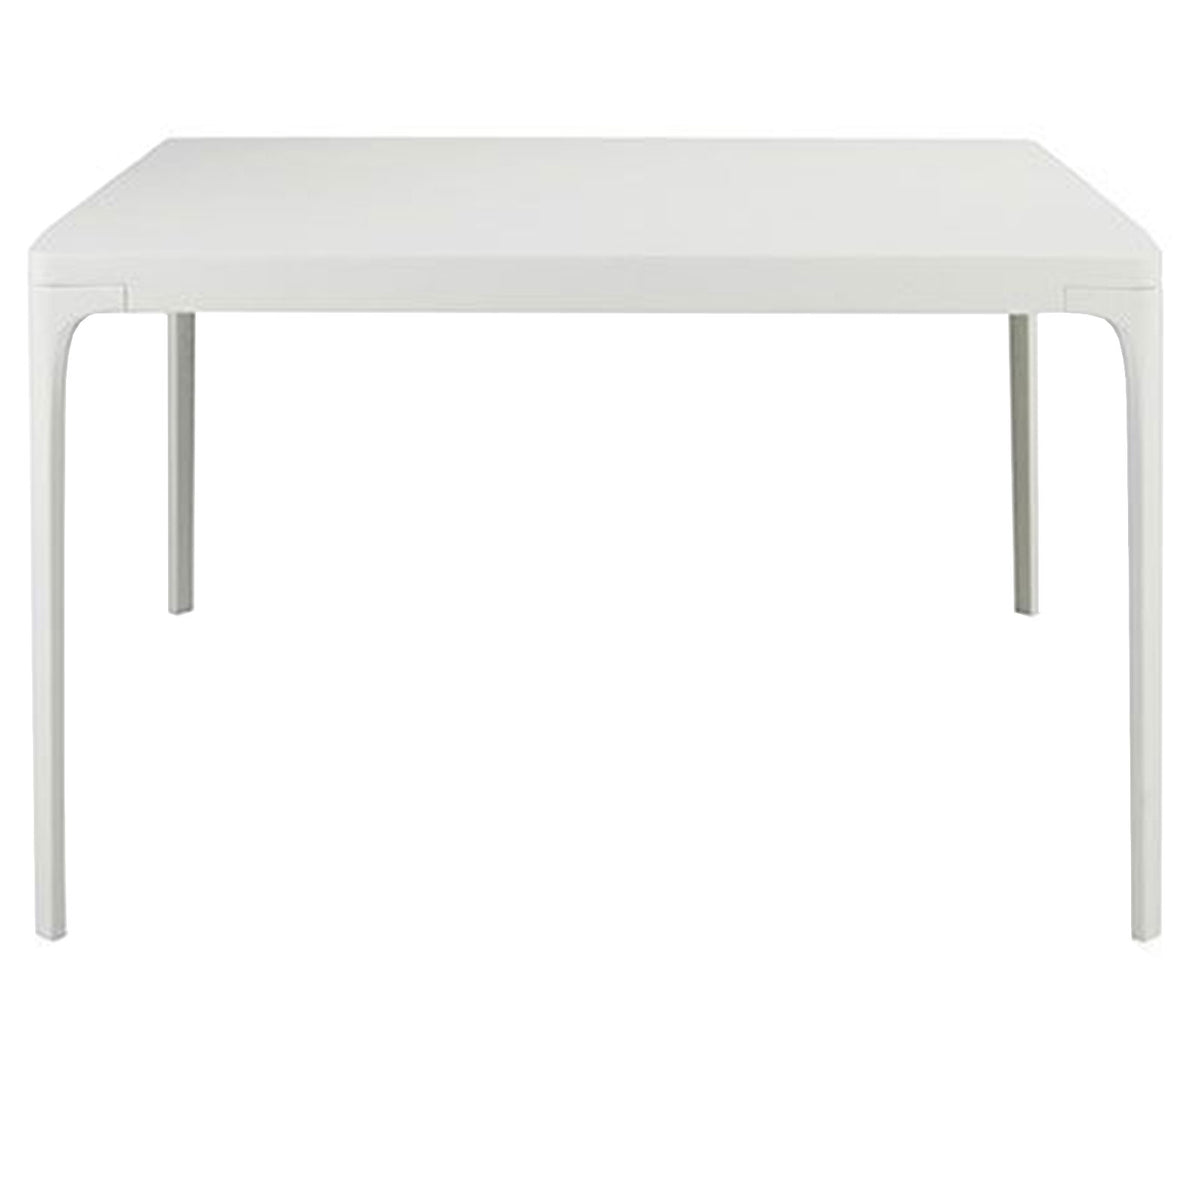 Play Outdoor Aluminium Square Table, White